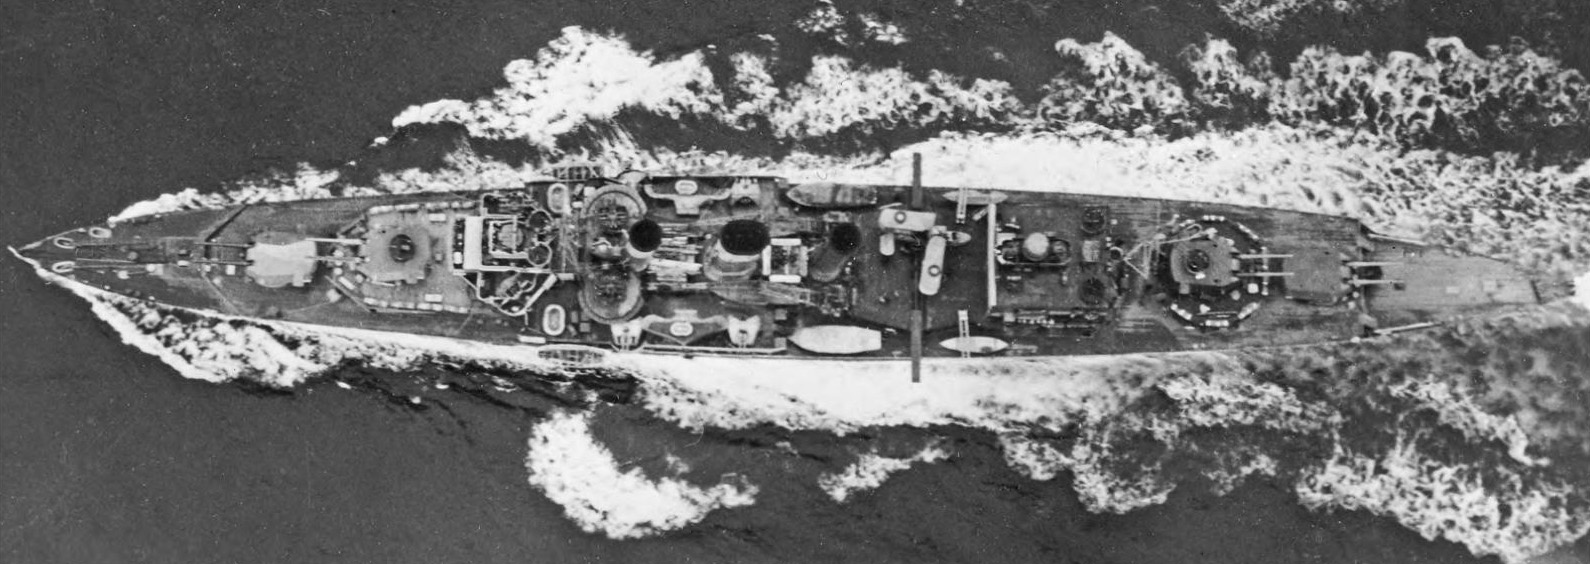 HMS Cumberland 1942.jpg